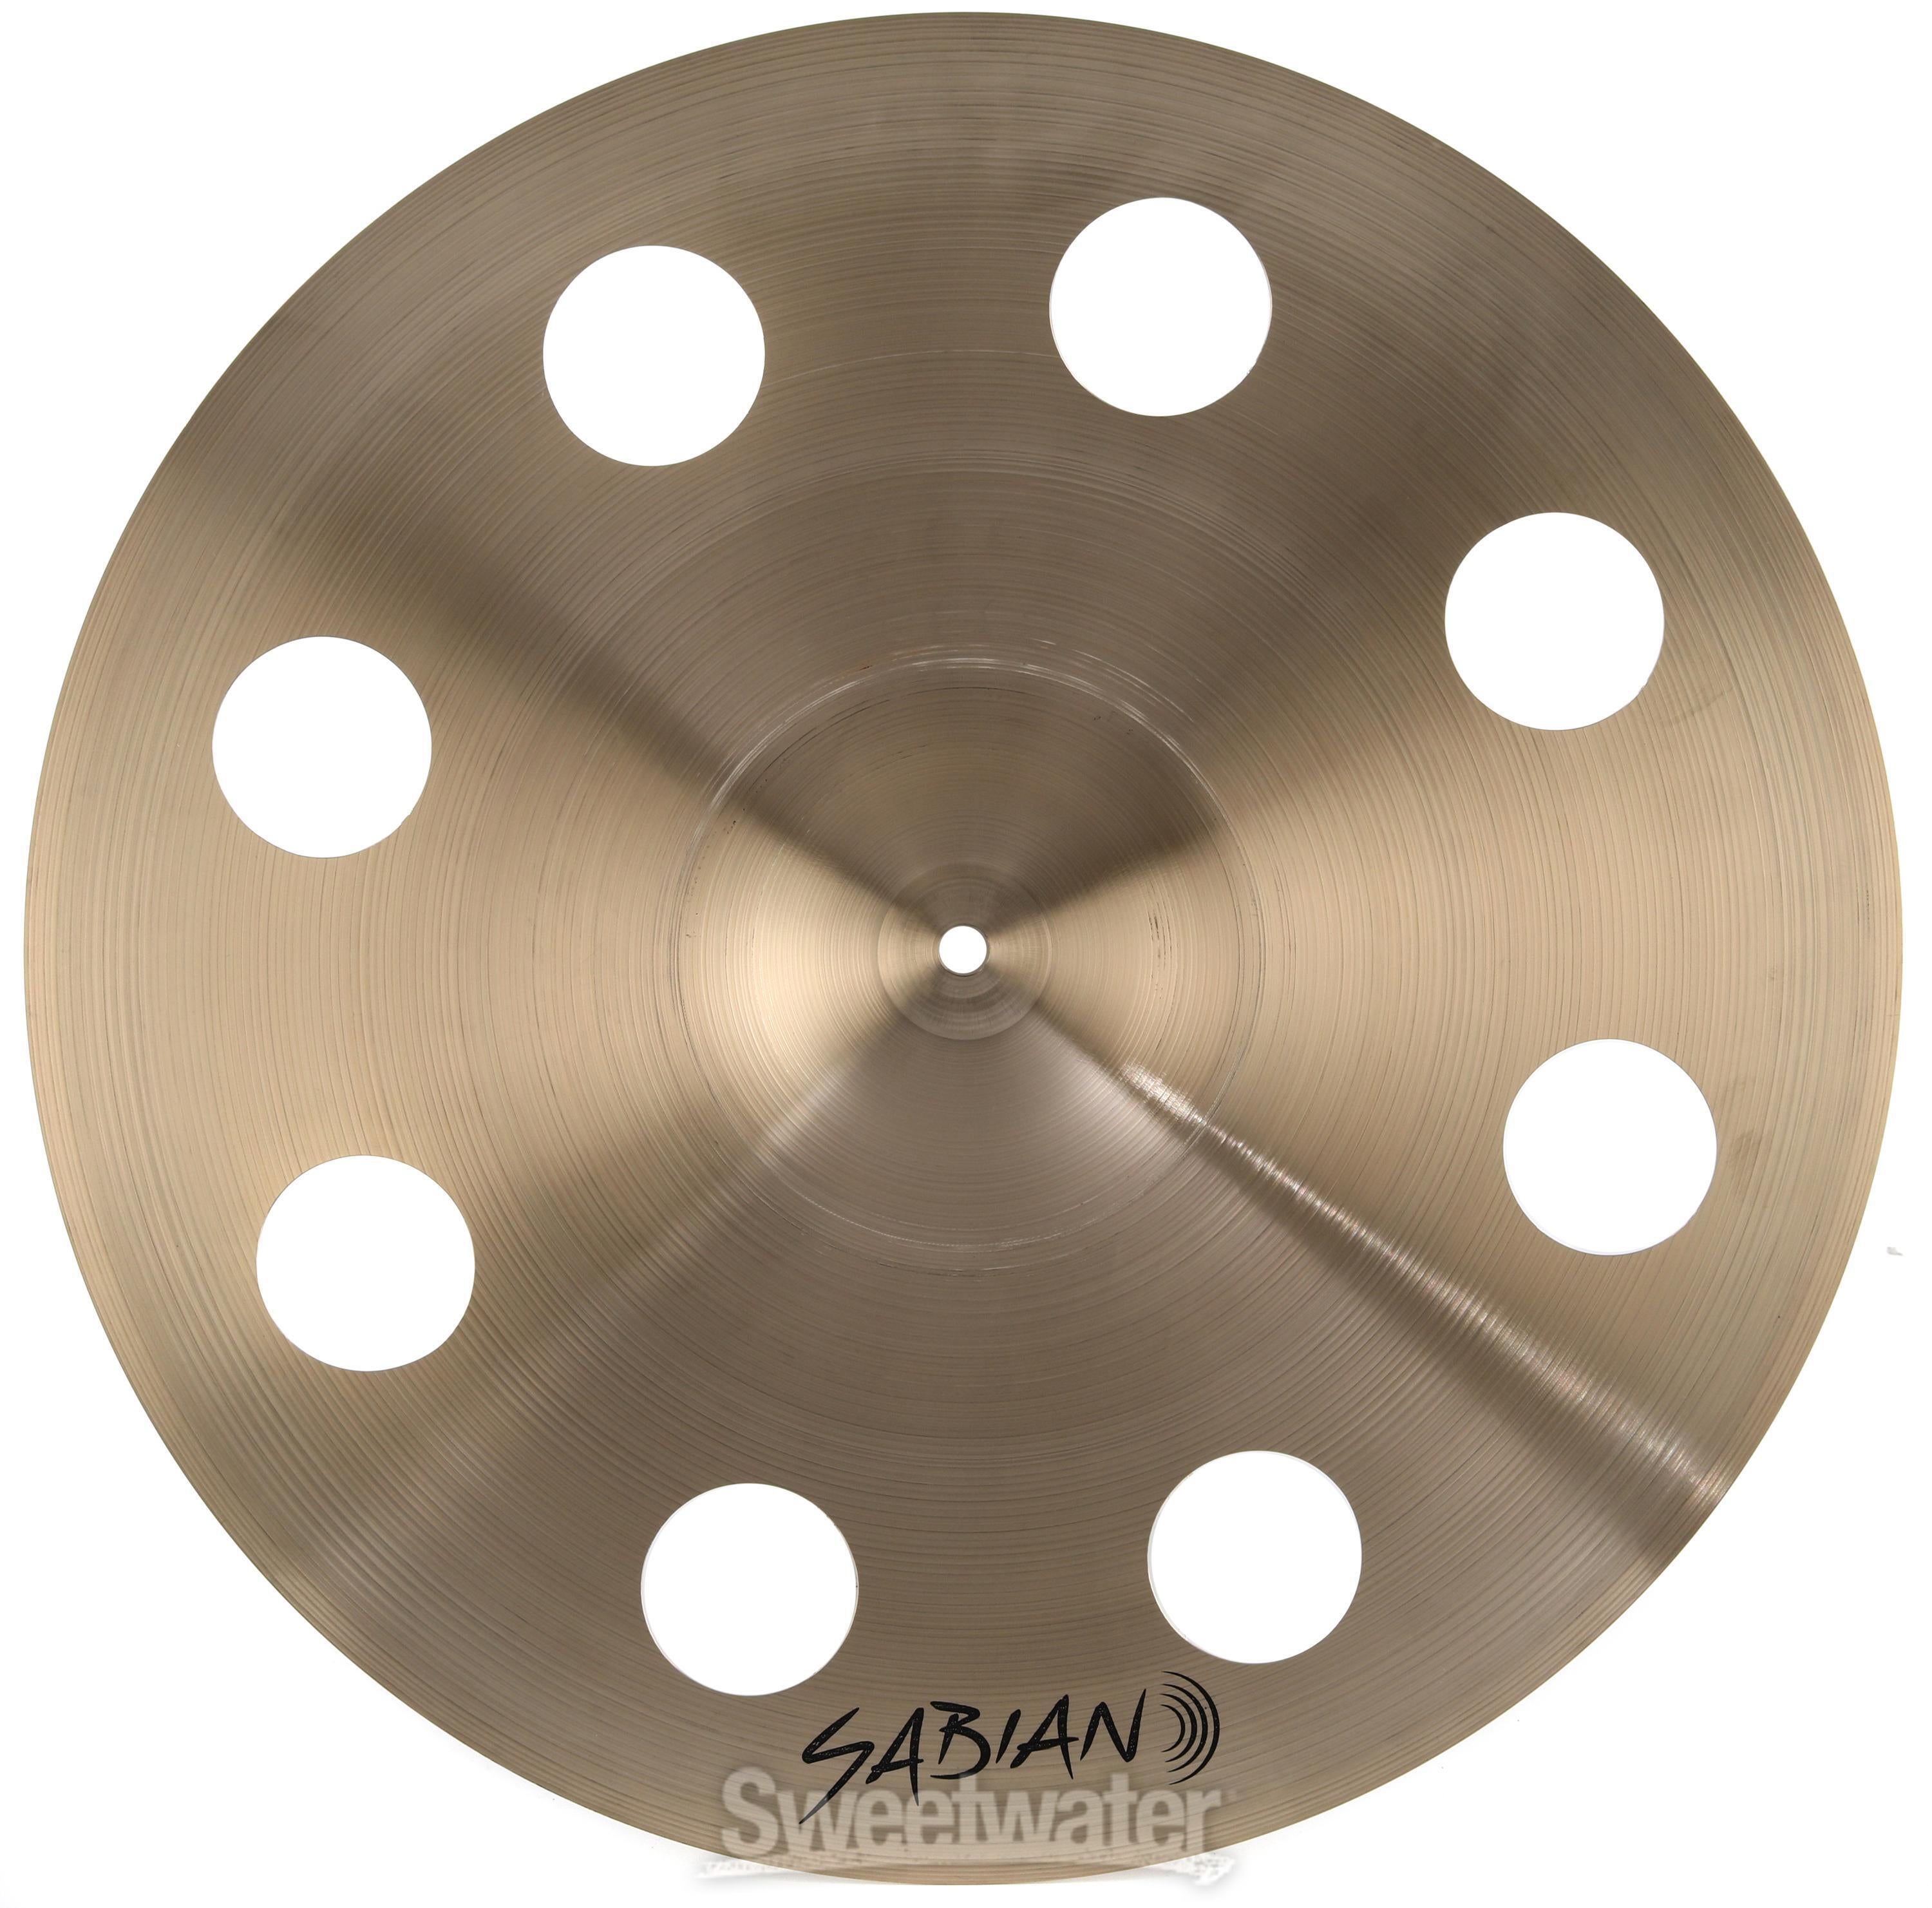 Sabian  inch AAX O Zone Crash Cymbal